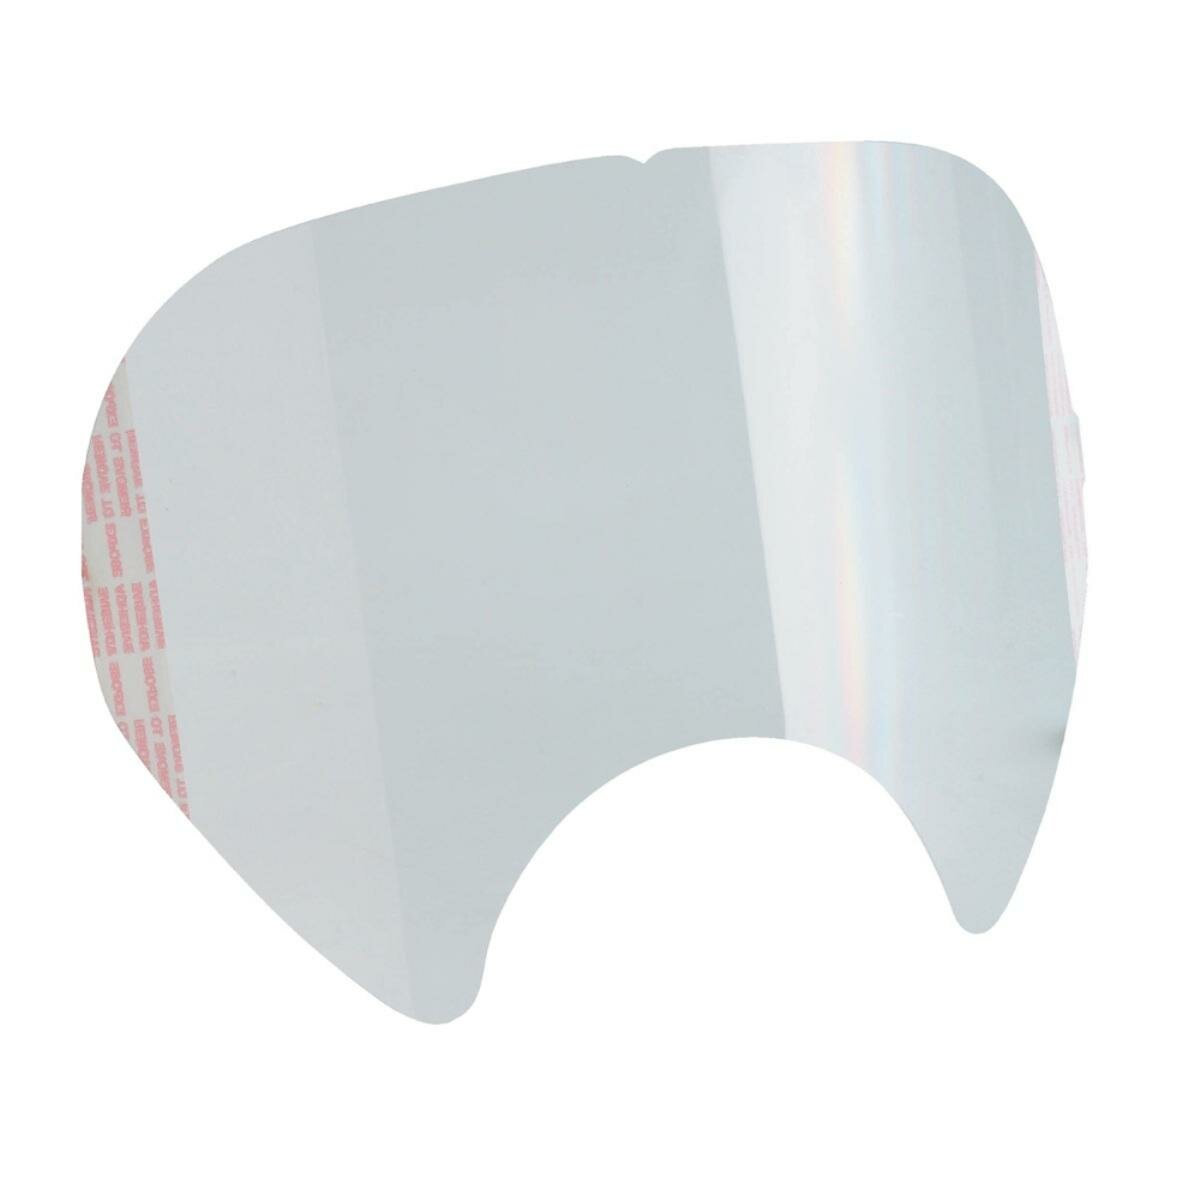 Пленка защитная для маски 5951 (арт. производителя 5951) 25 шт/уп